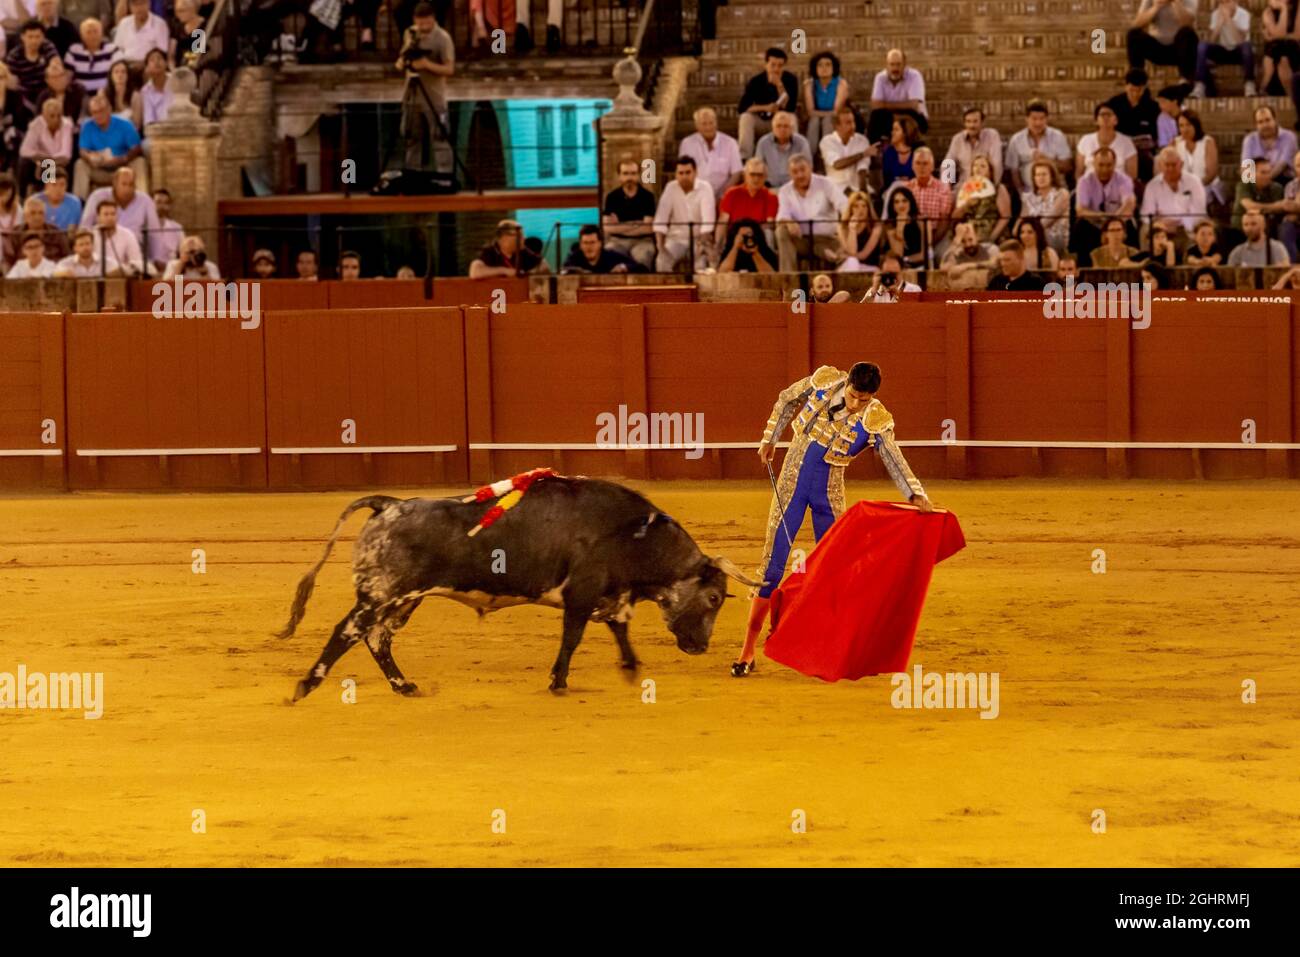 Matador mit Muleta und Espada mit laufendem Stier, Torero mit rotem Tuch in traditioneller Kleidung, Stierkampf, Stierkampfarena Plaza de Toros de la Real Stockfoto